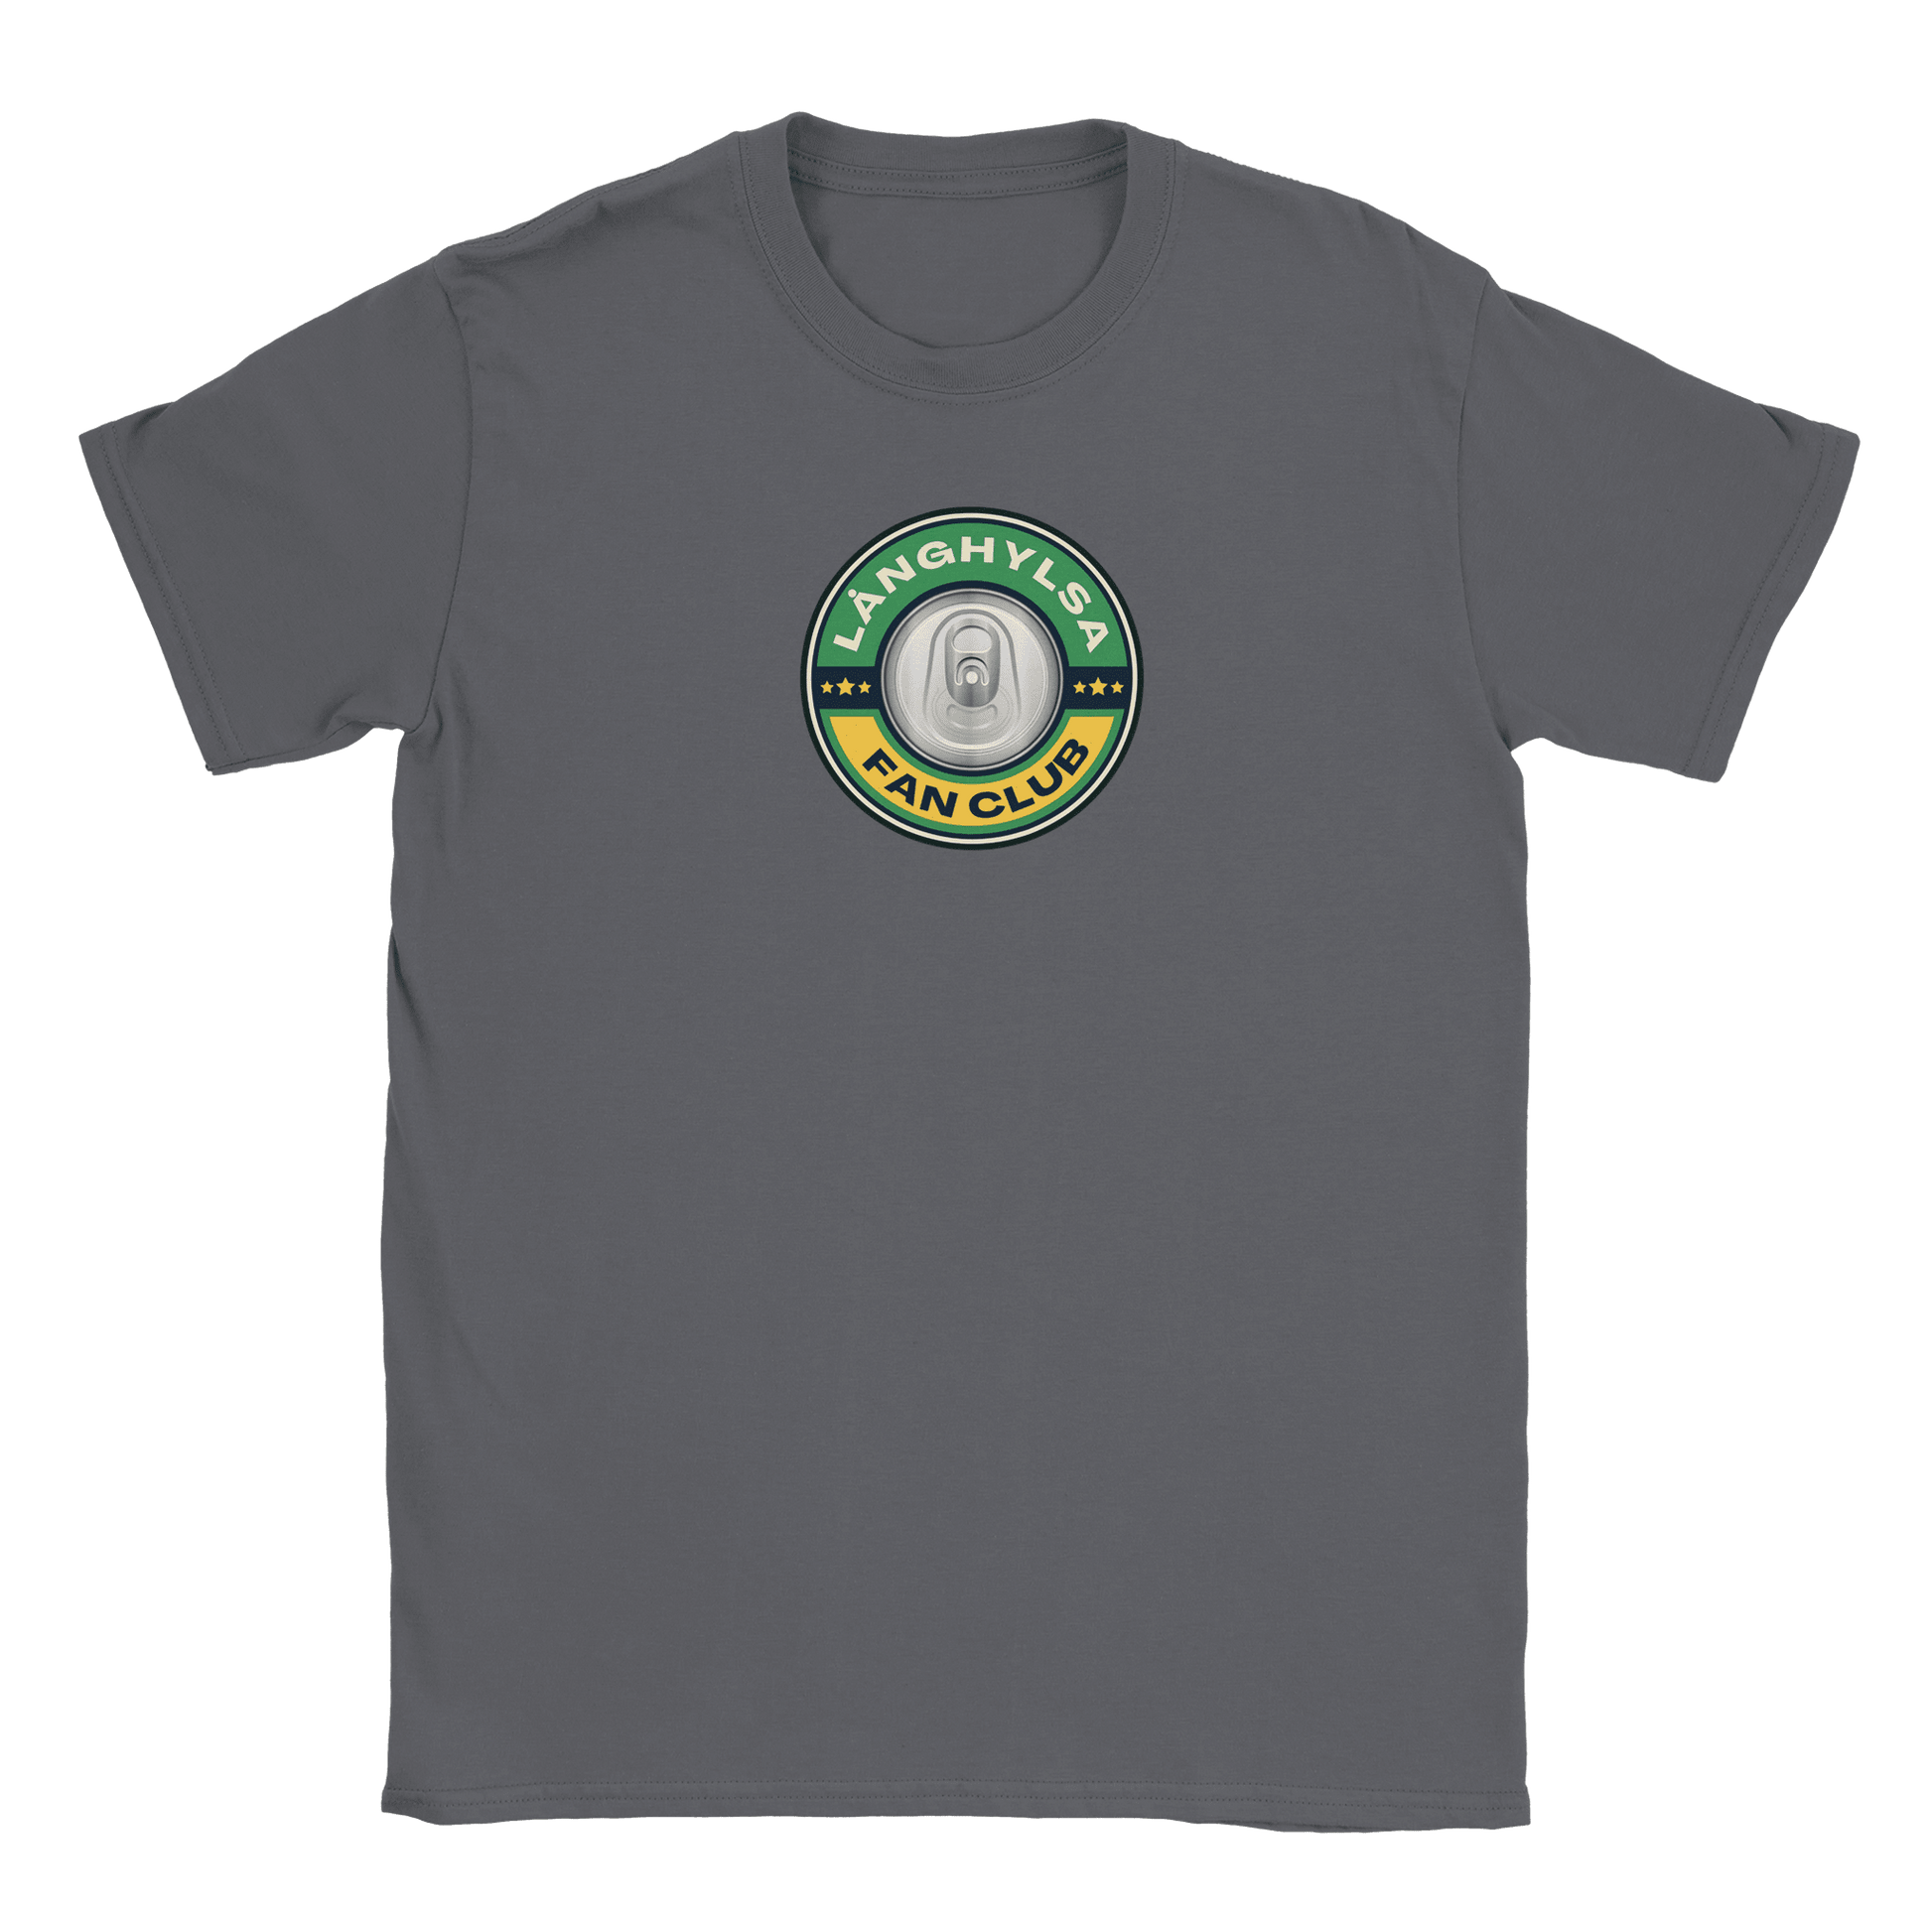 Långhylsa Fan Club - T-shirt Charcoal